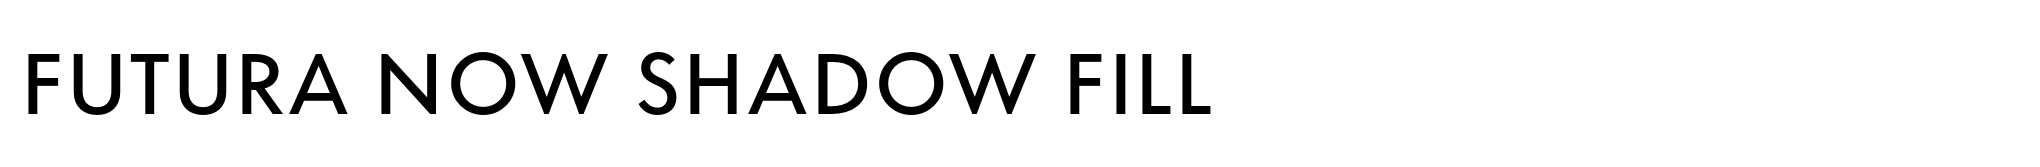 Futura Now Shadow Fill image